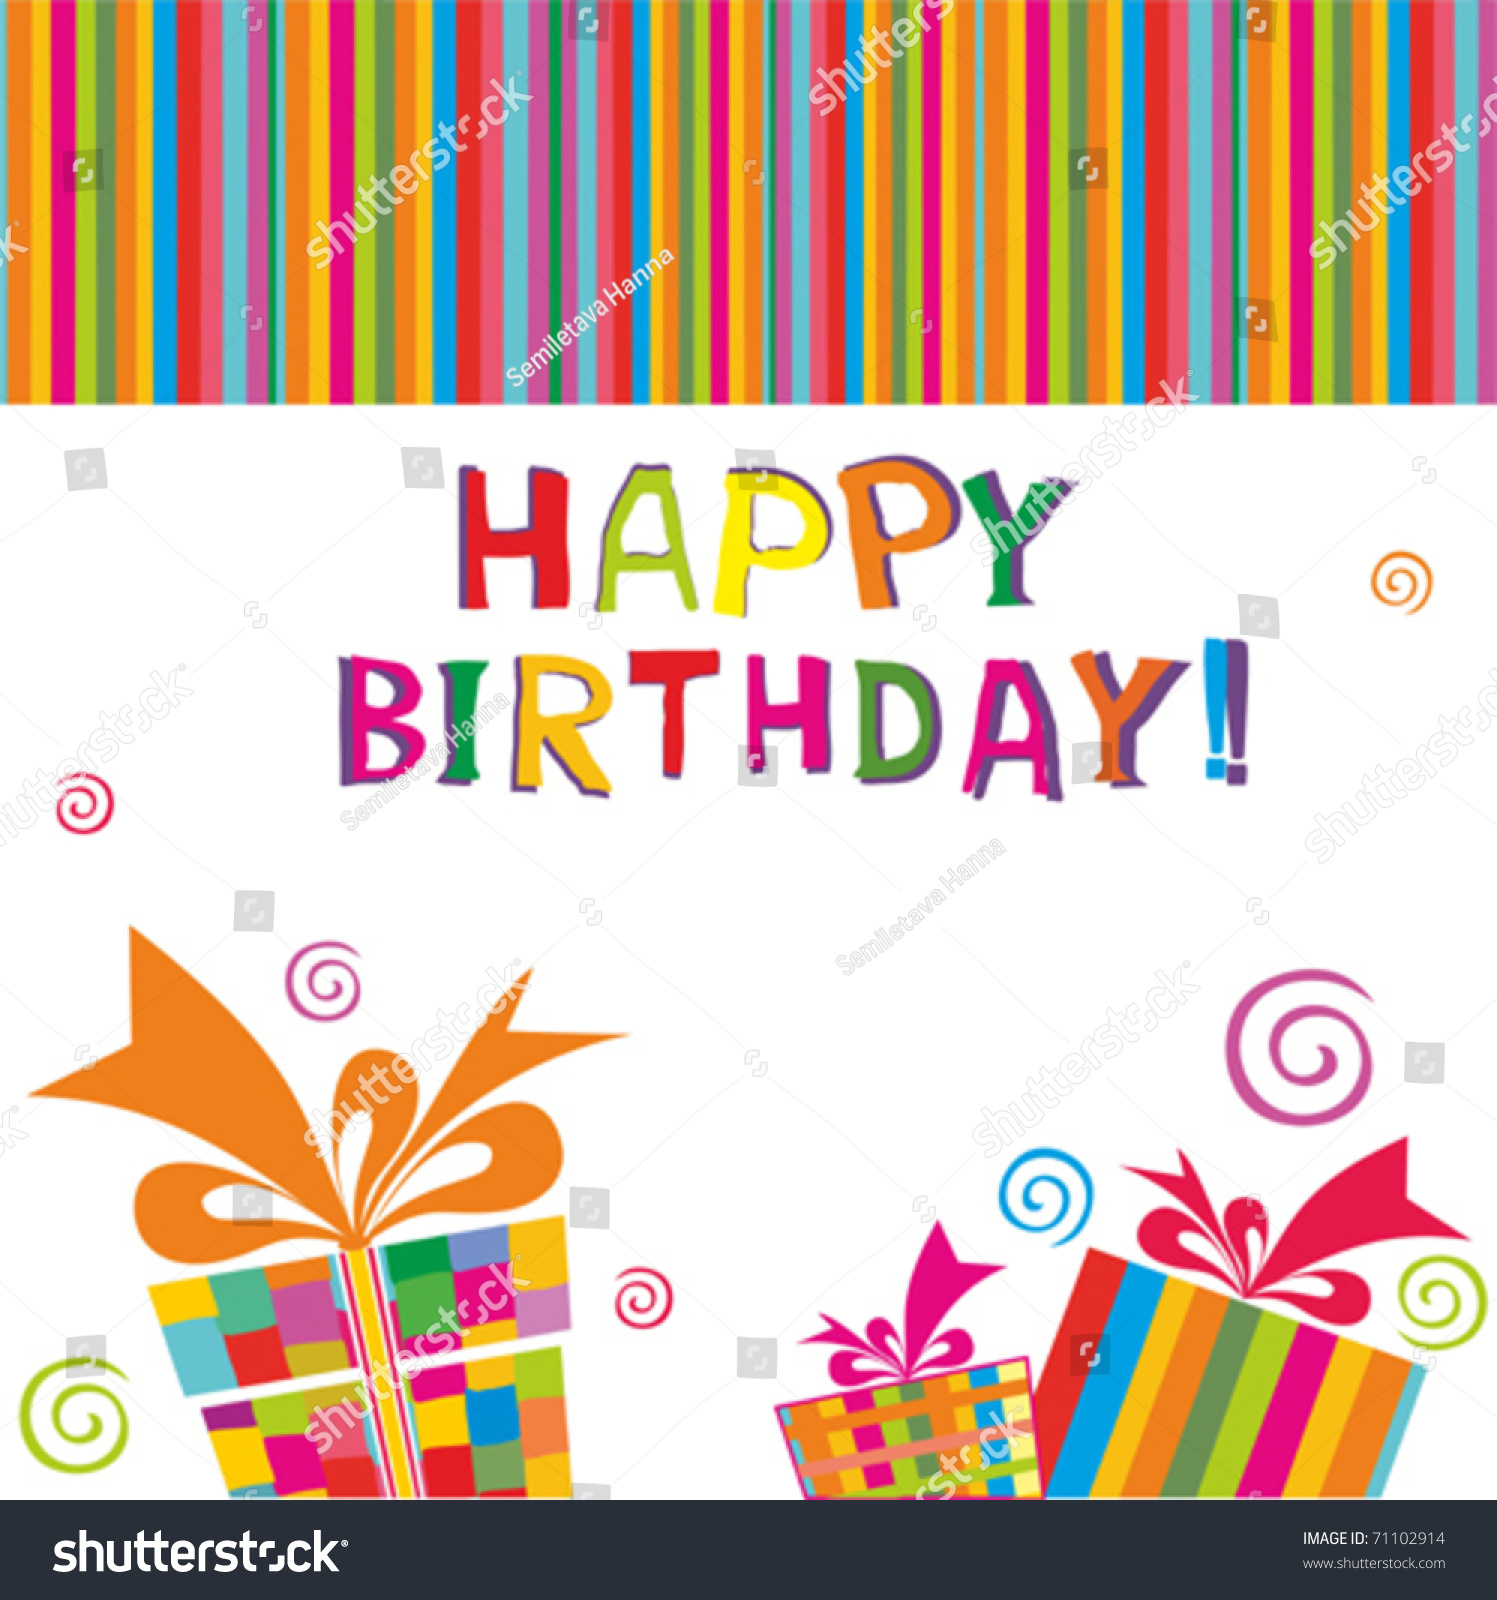 Happy Birthday Card Vector Illustration Stock Vector 71102914 ...